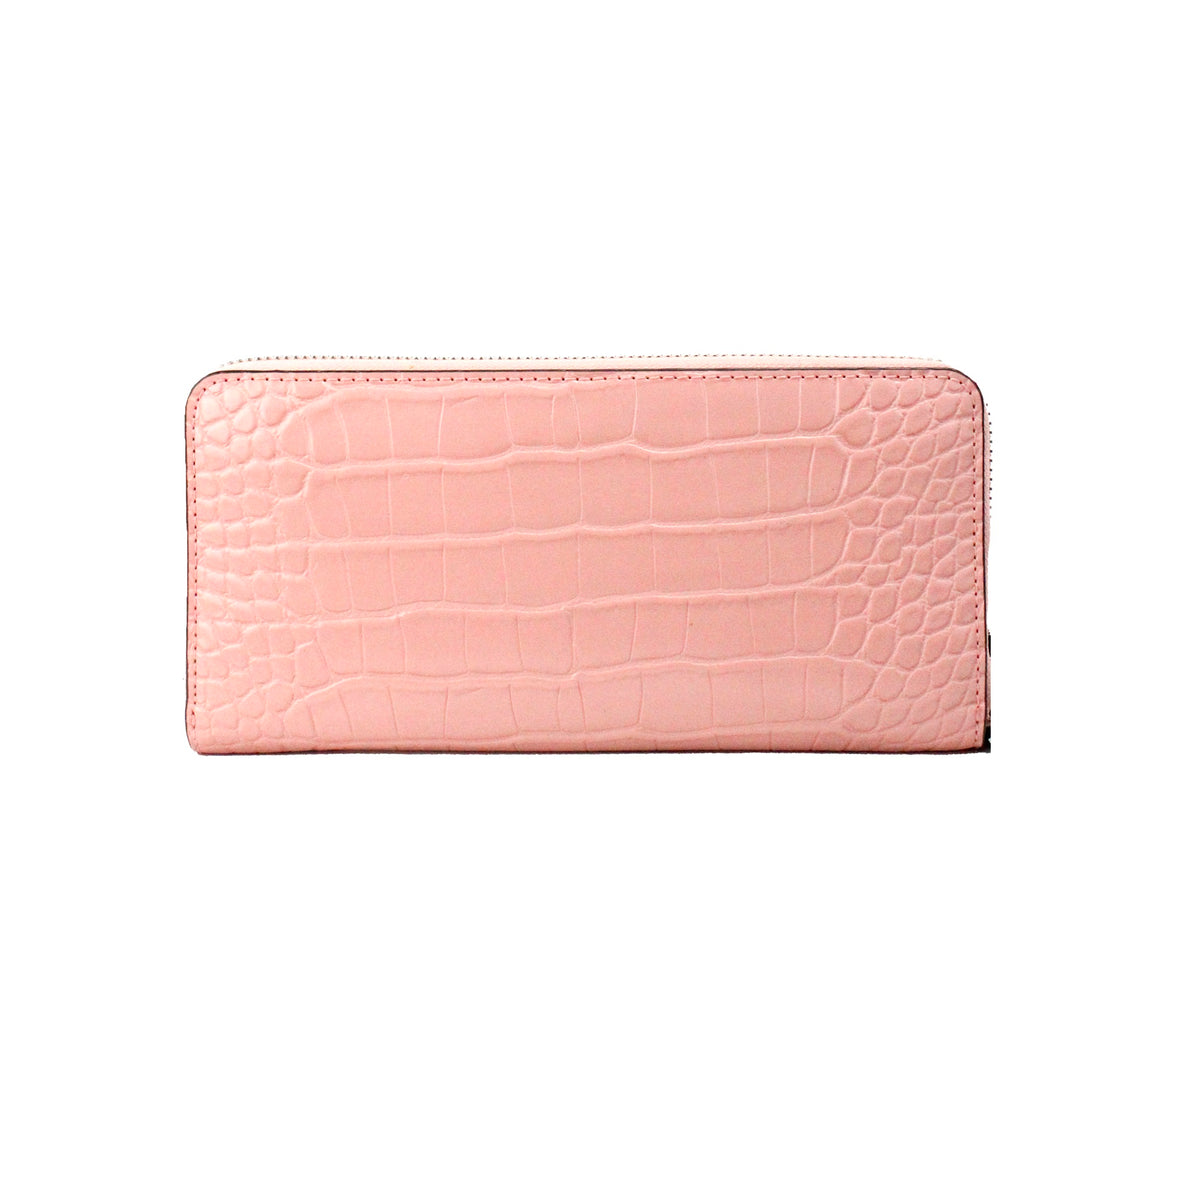 Michael Kors – Große Continental-Geldbörse aus rosafarbenem Leder mit Animalprint im Jet Set-Stil